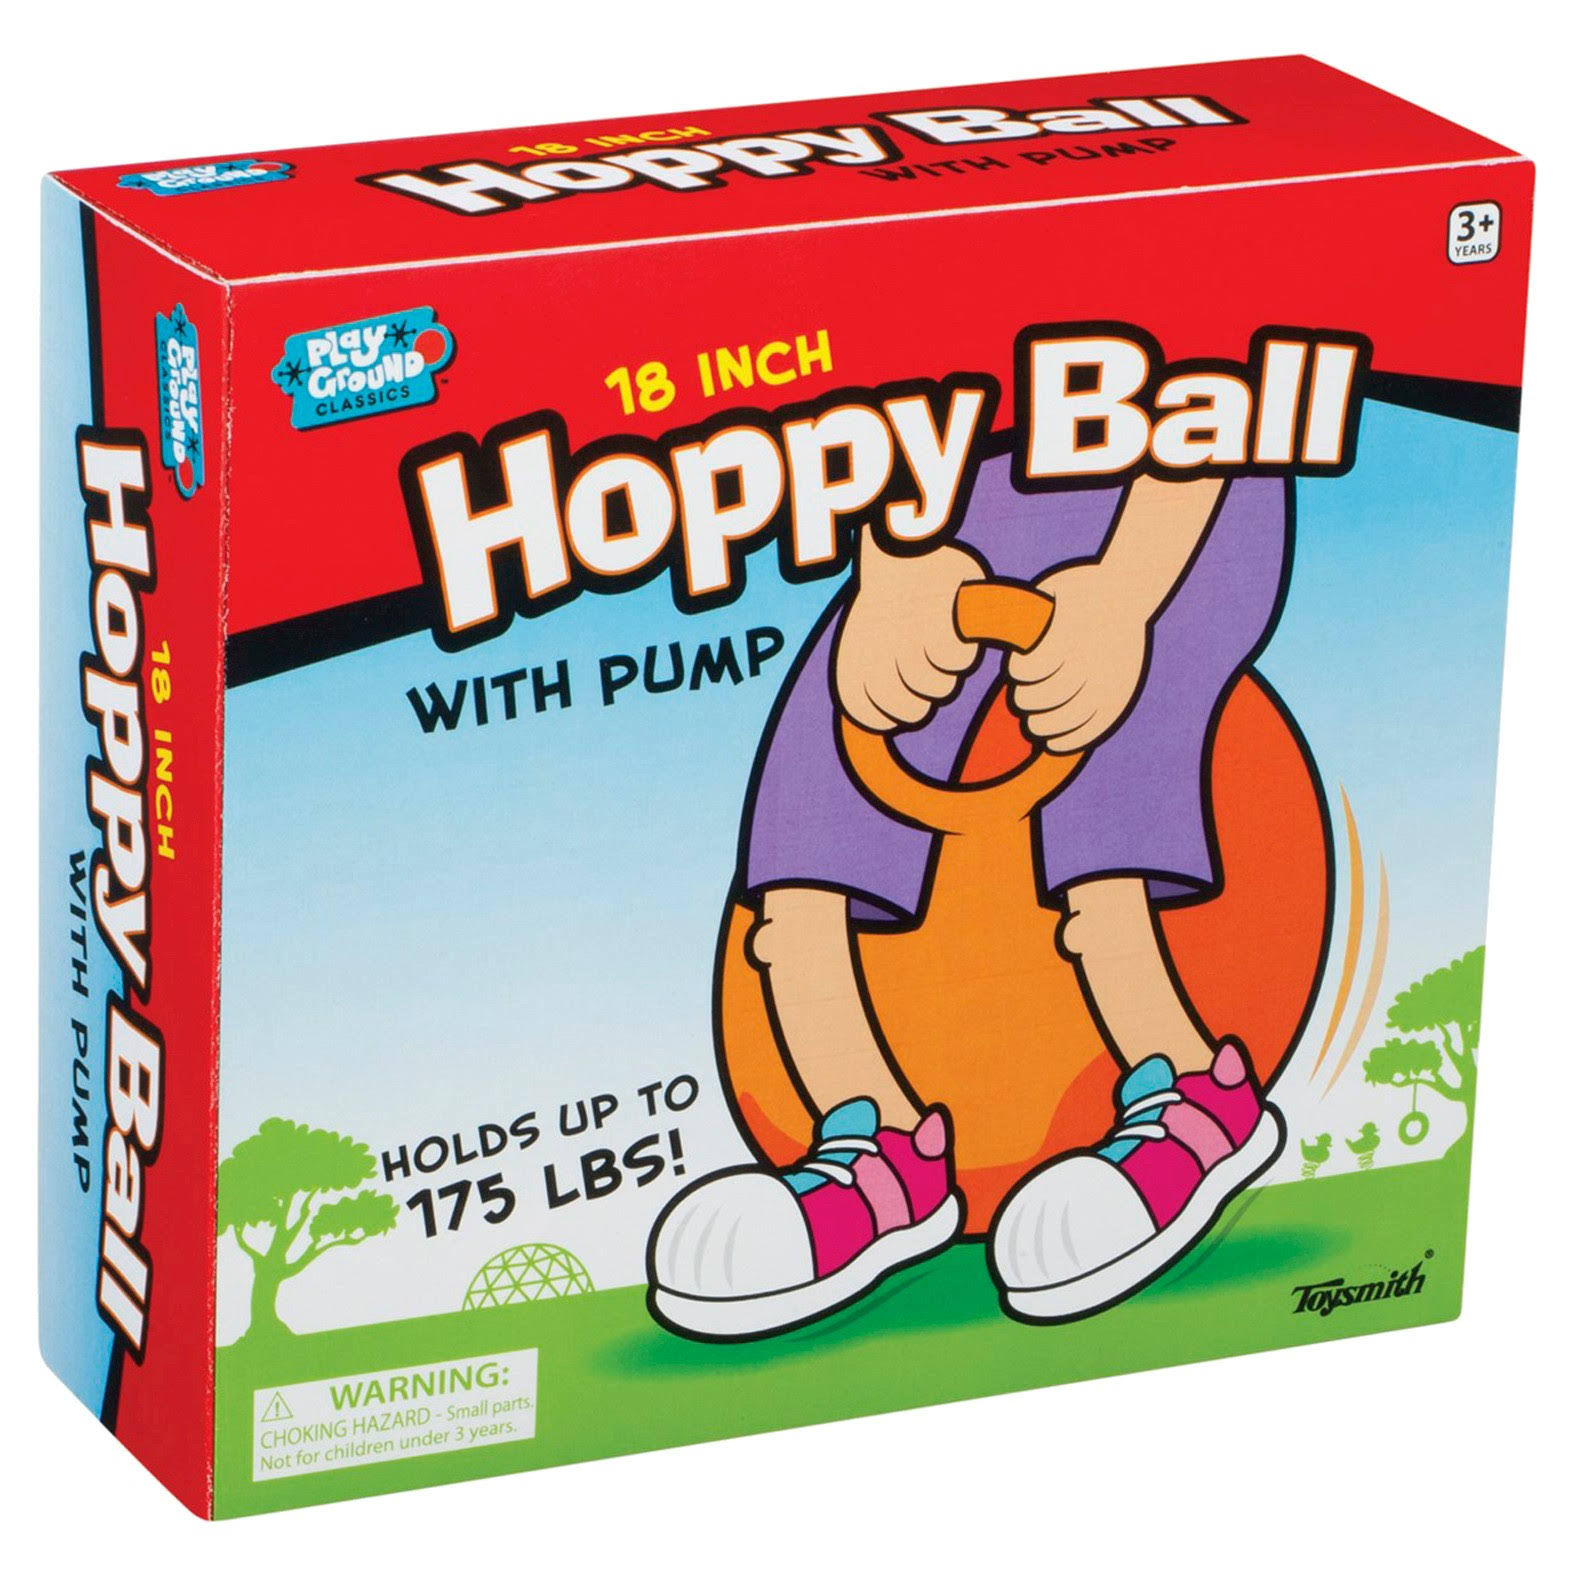 Toysmith 18-Inch Hoppy Balls With Pump